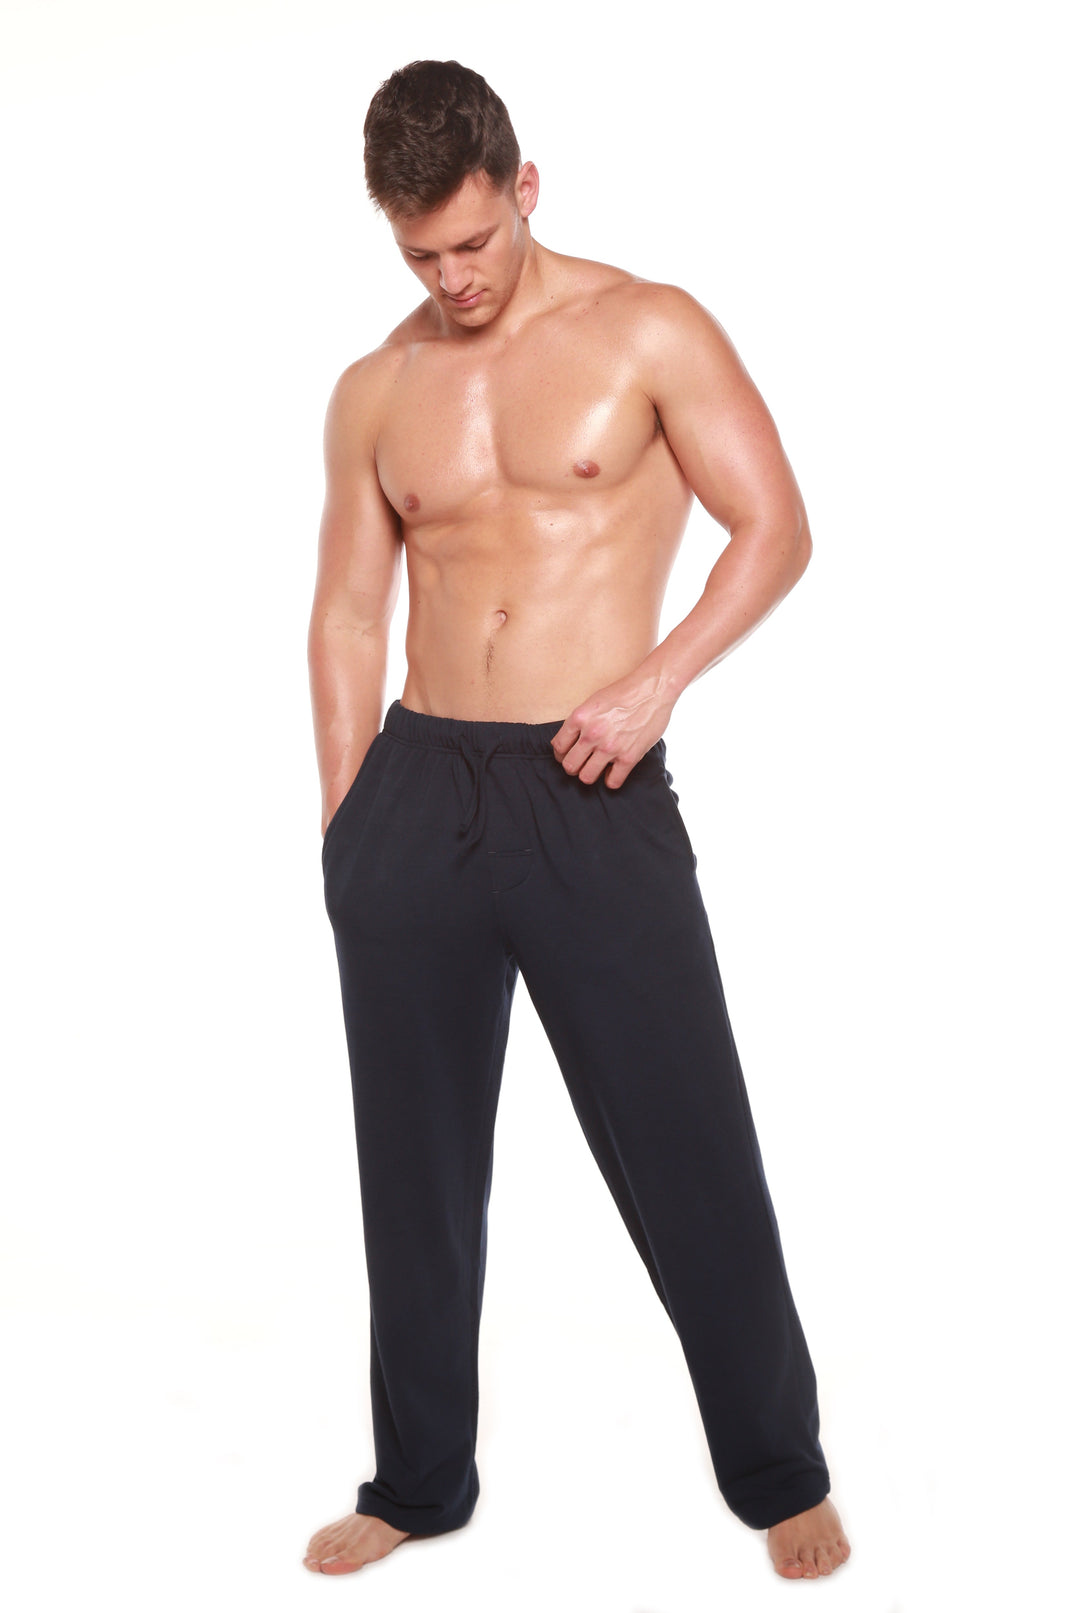 Men's Soft Bamboo Lounge Pajama Set - Short Sleeve Top & Pants